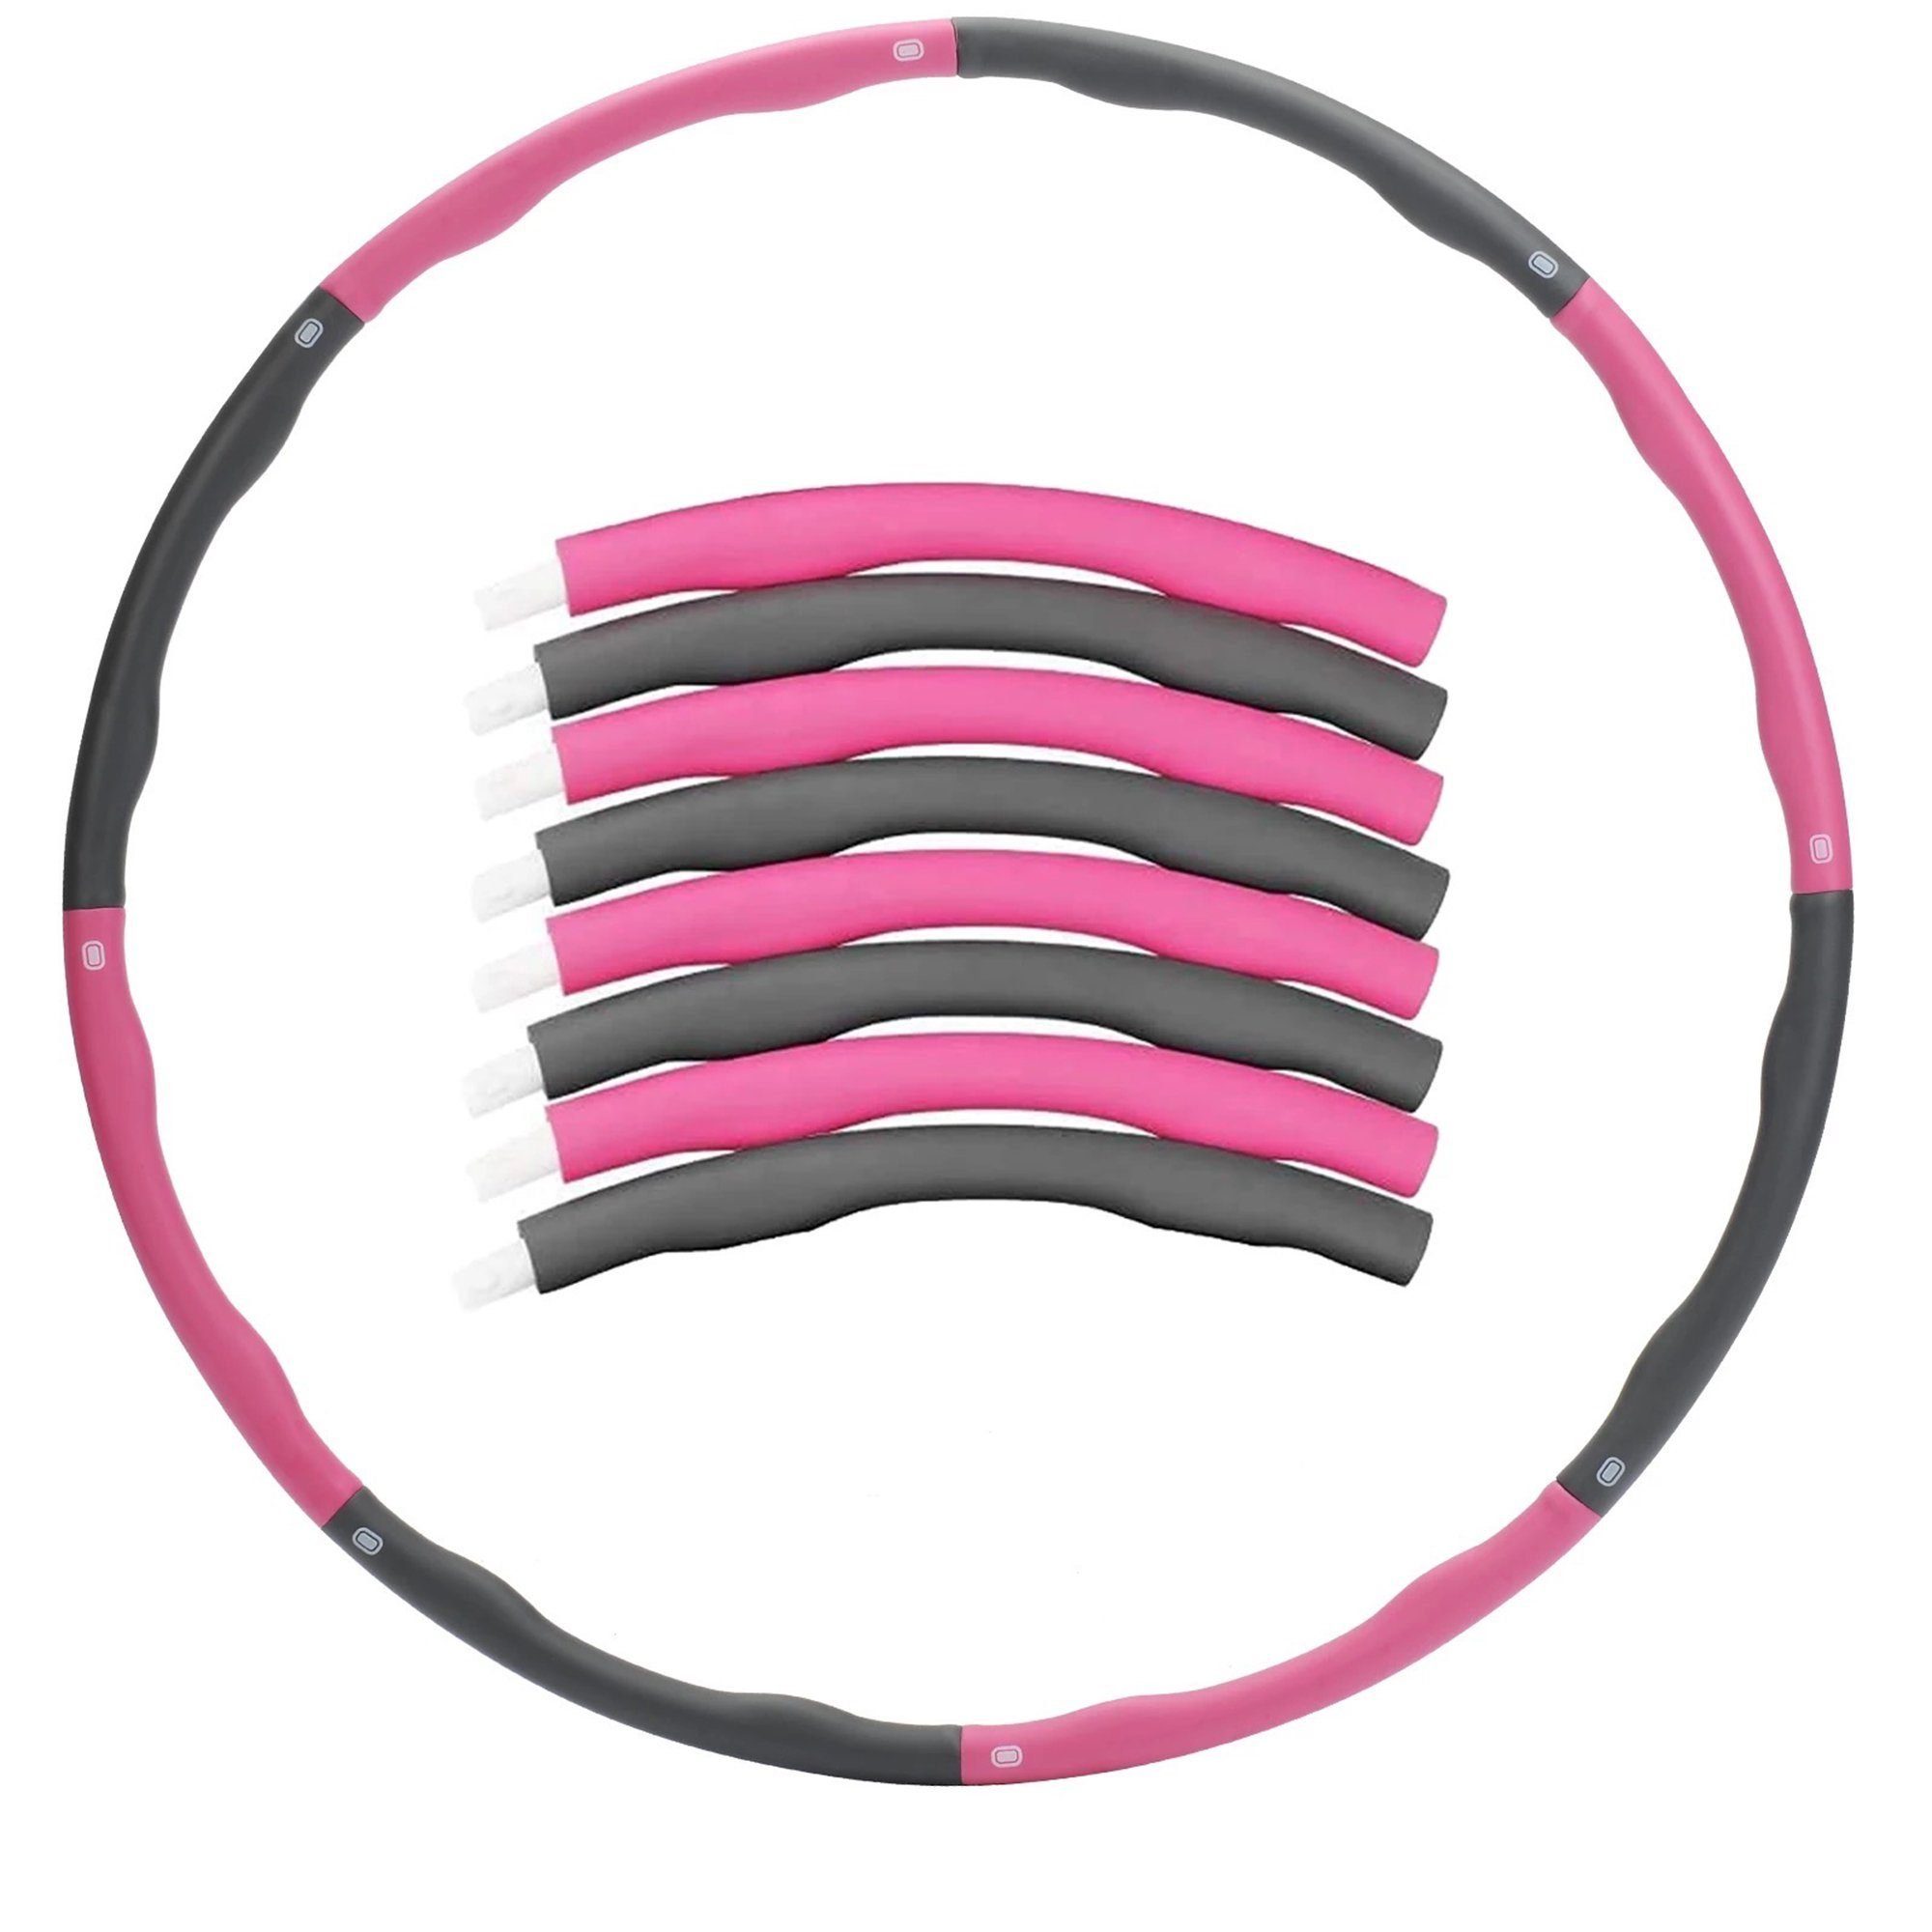 Technofit Hula-Hoop-Reifen Hula Hoop pink Erwachsene Abnehmen, Hula Zusammenstecken zum Reifen Anfänger, Fitnessgerät Hoop